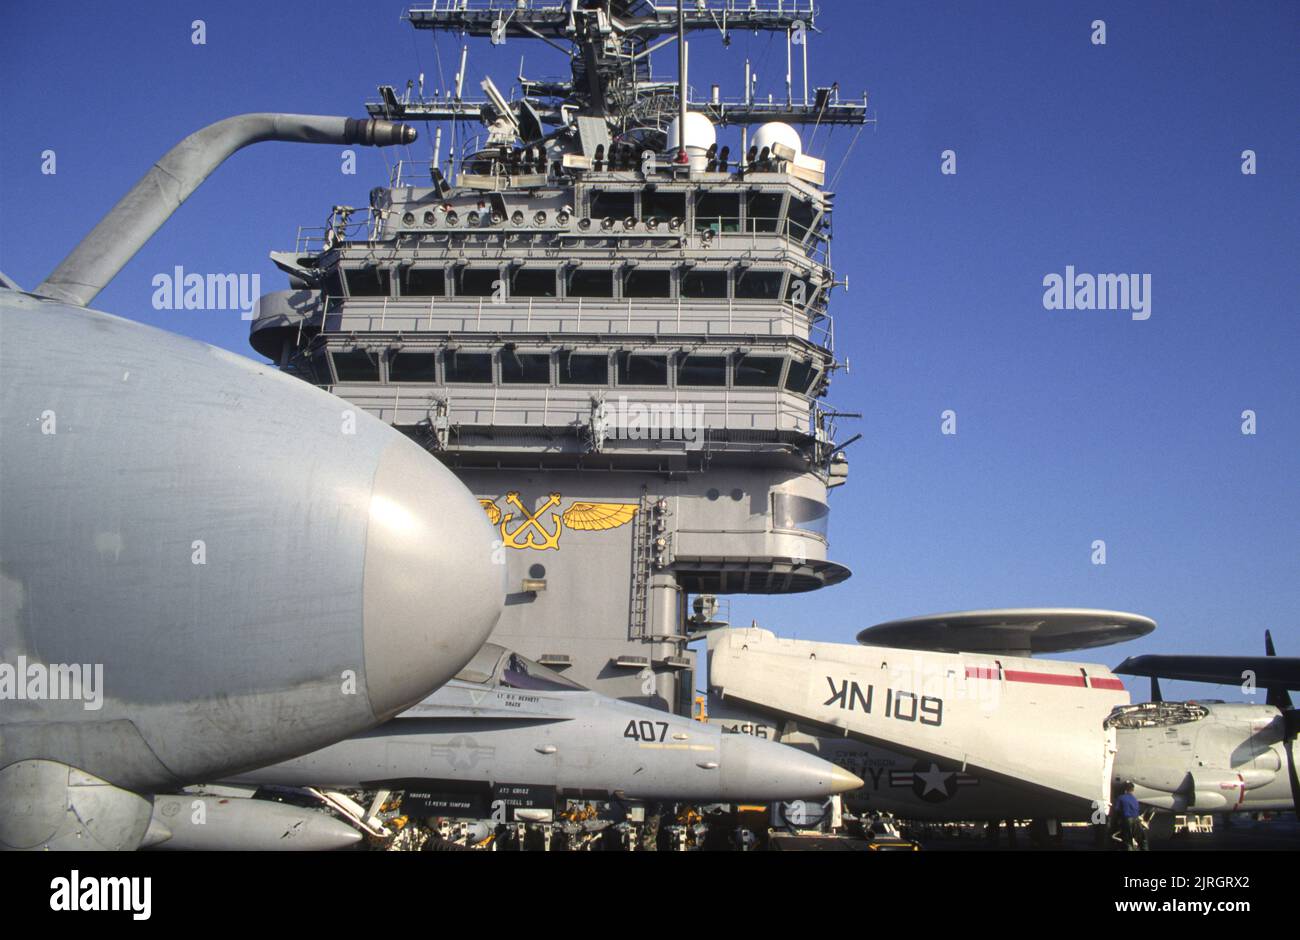 Aircraft carrier island with flightdeck full of aircraft Stock Photo